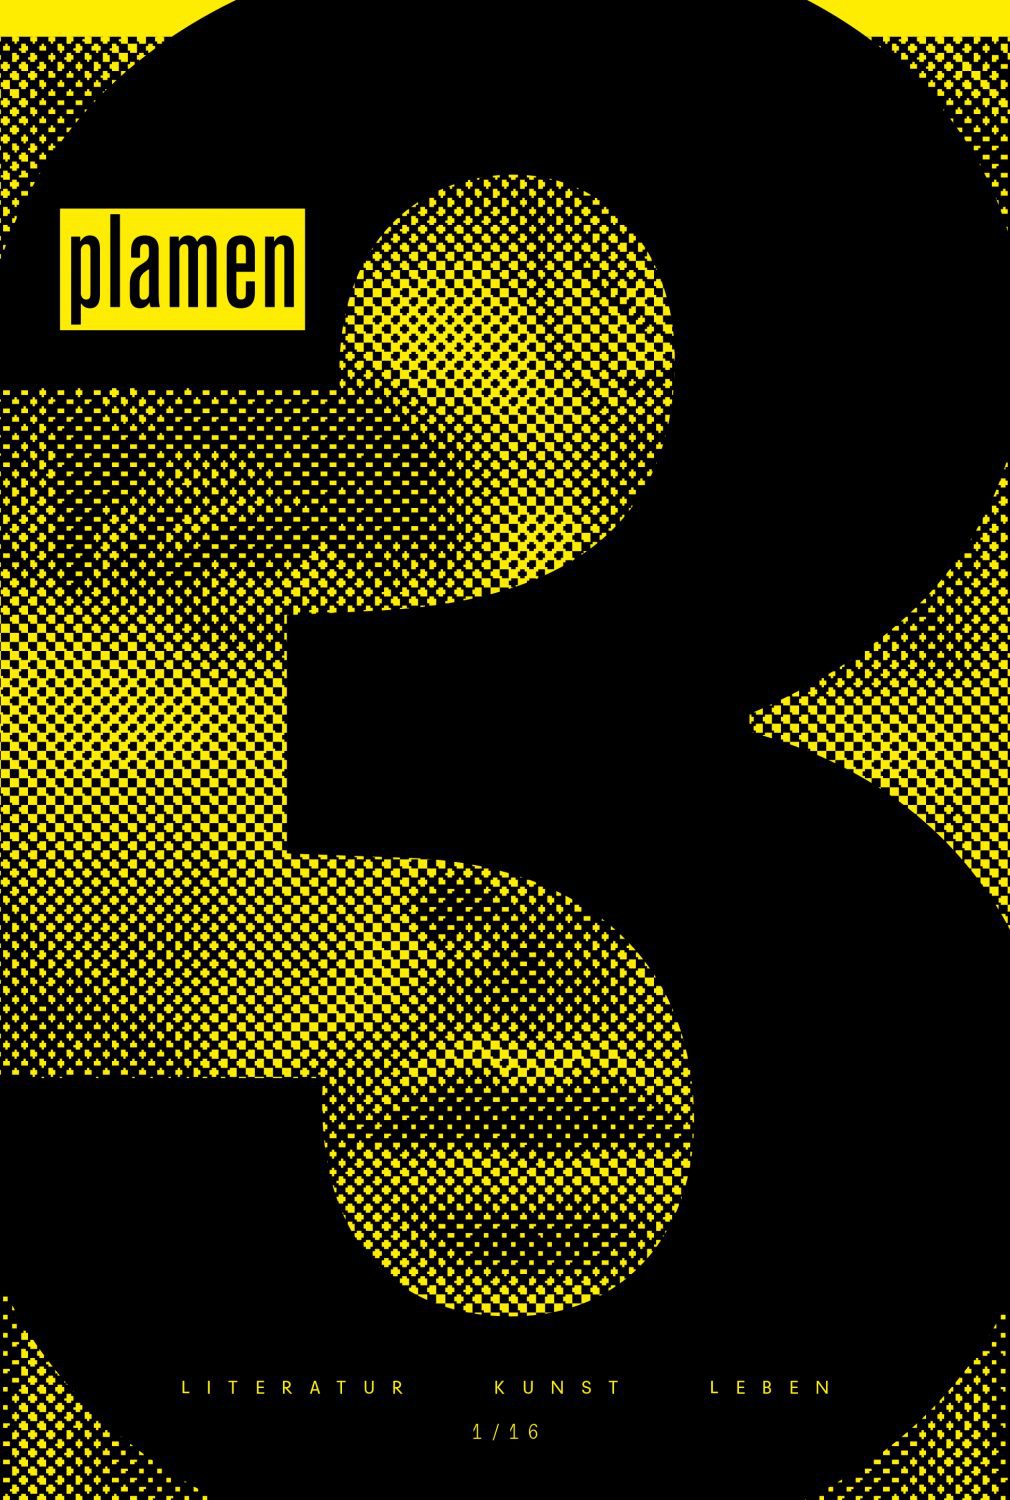 Plamen DejanoffPlamen 1/16, 2016Poster, digital print83.5 x 56 cm